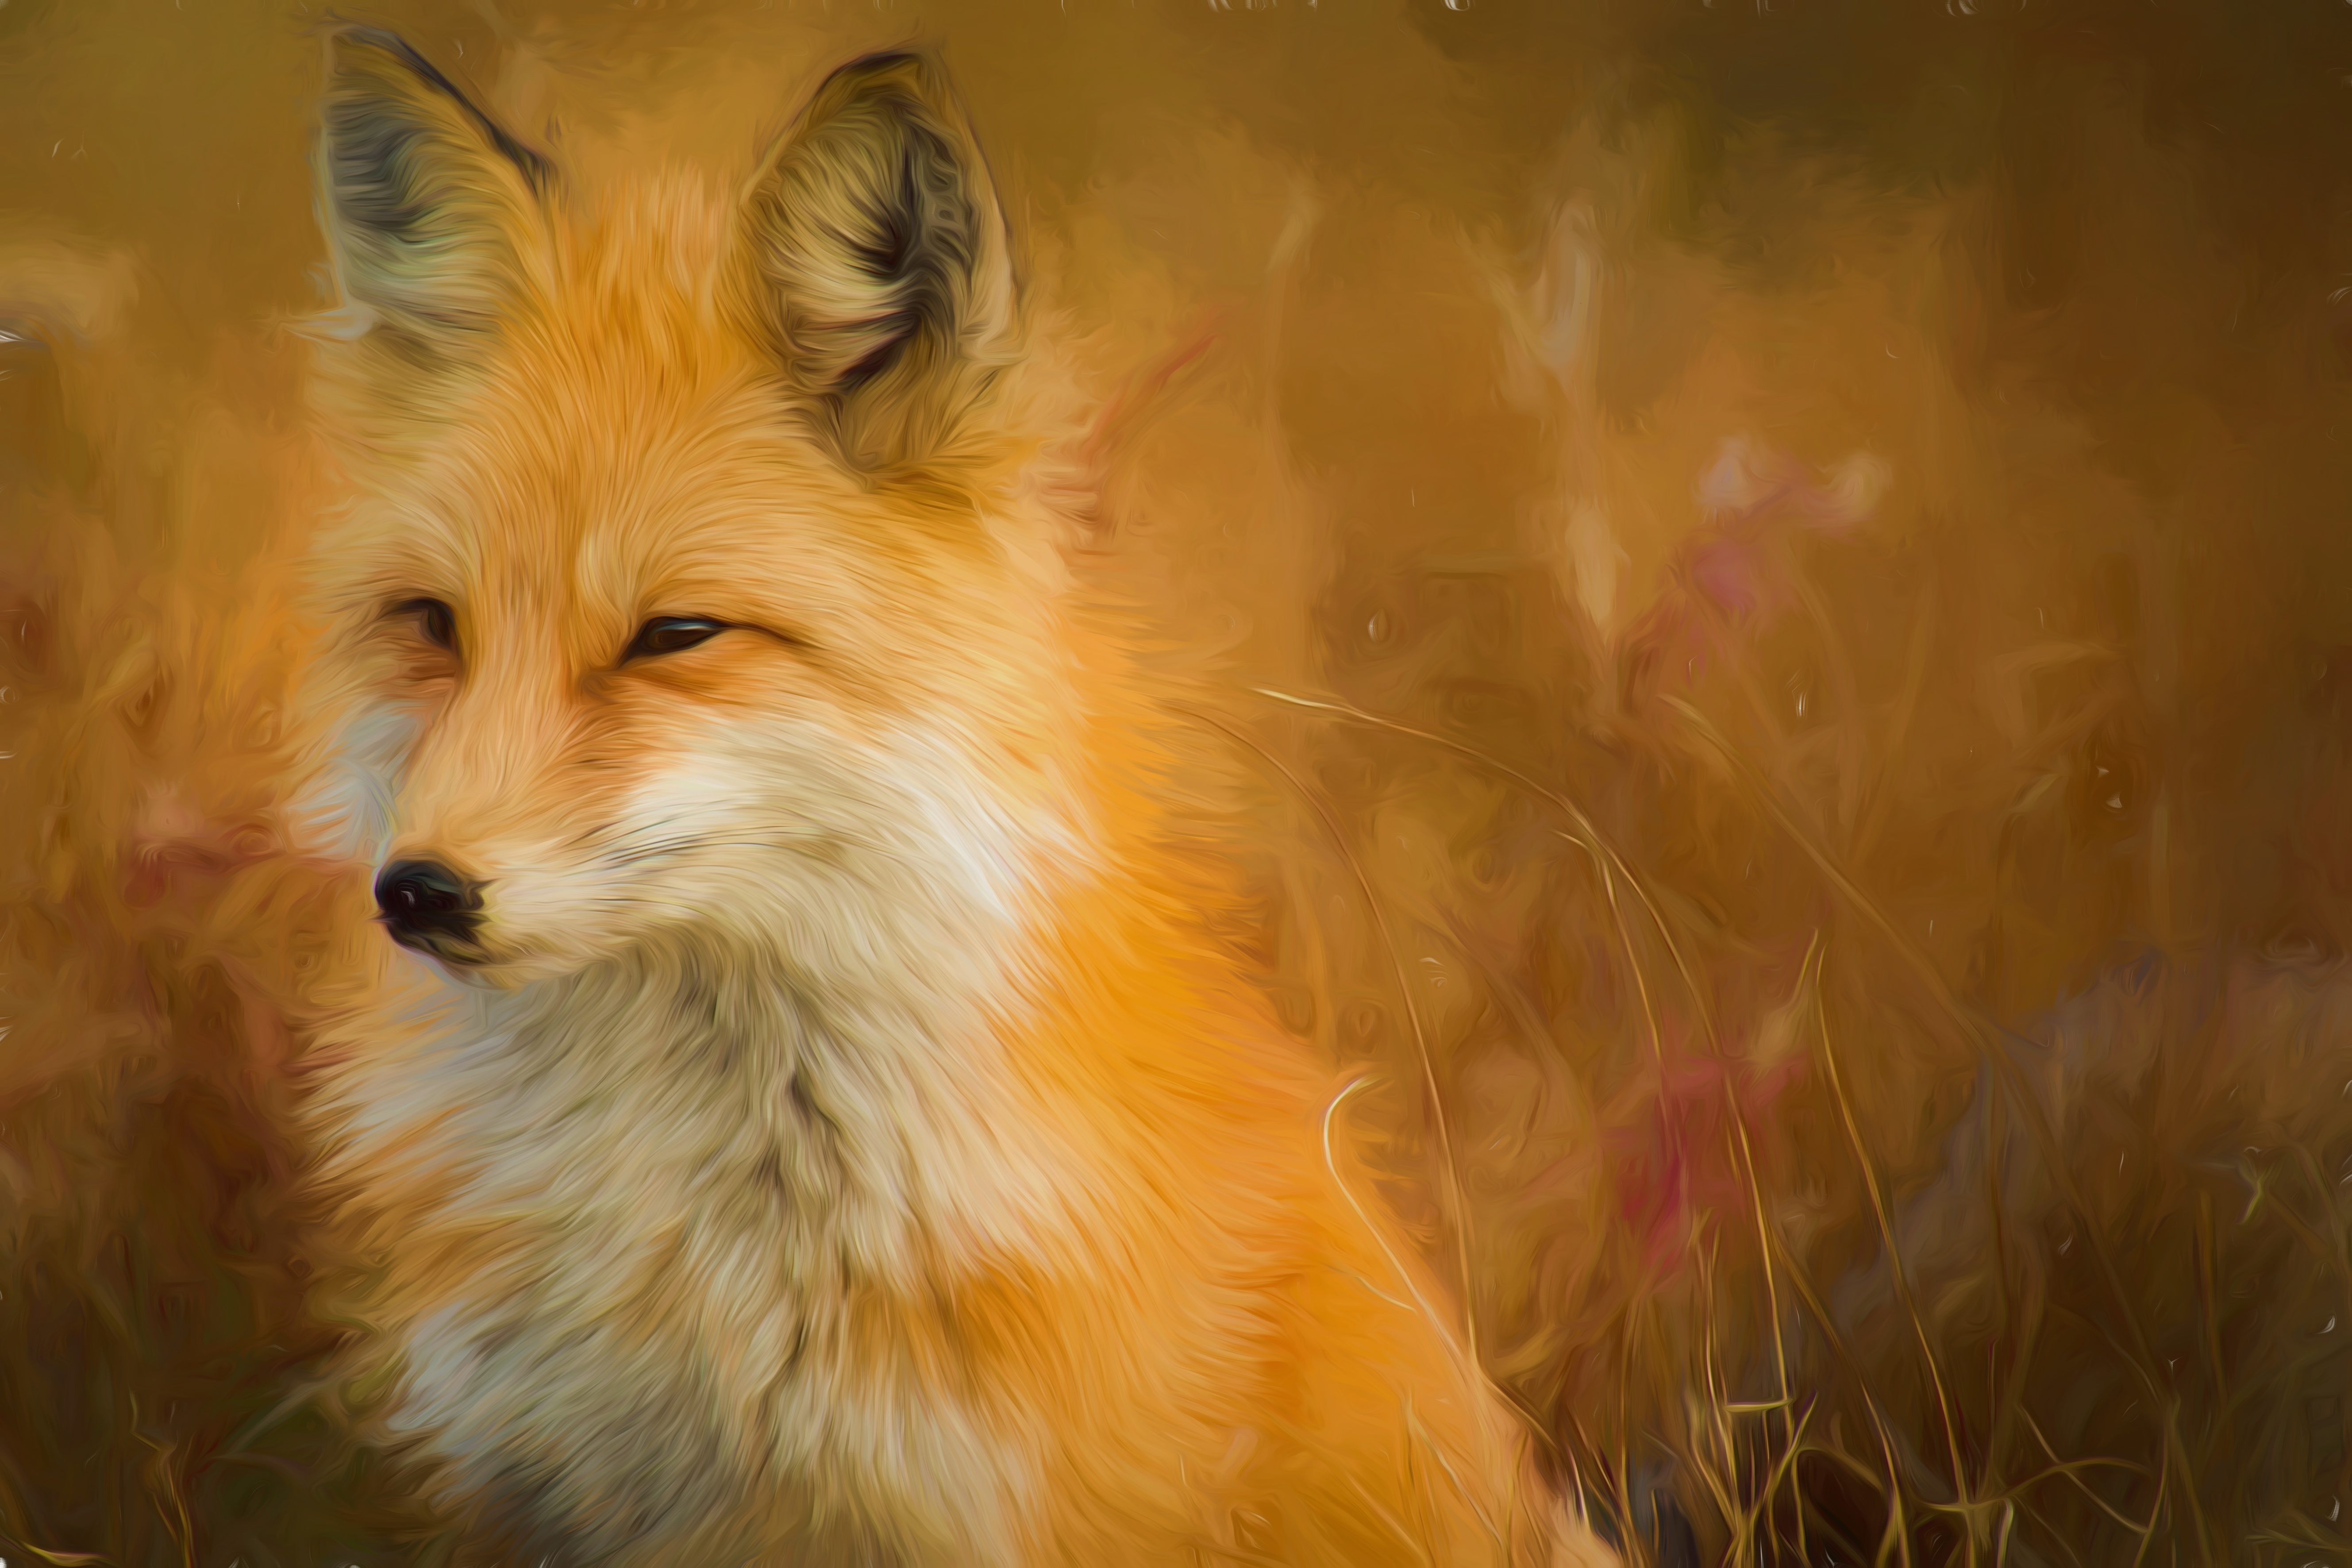 HD wallpaper, Artwork, Fox, Animal Portrait, Oil Painting, 5K, Wild Animal